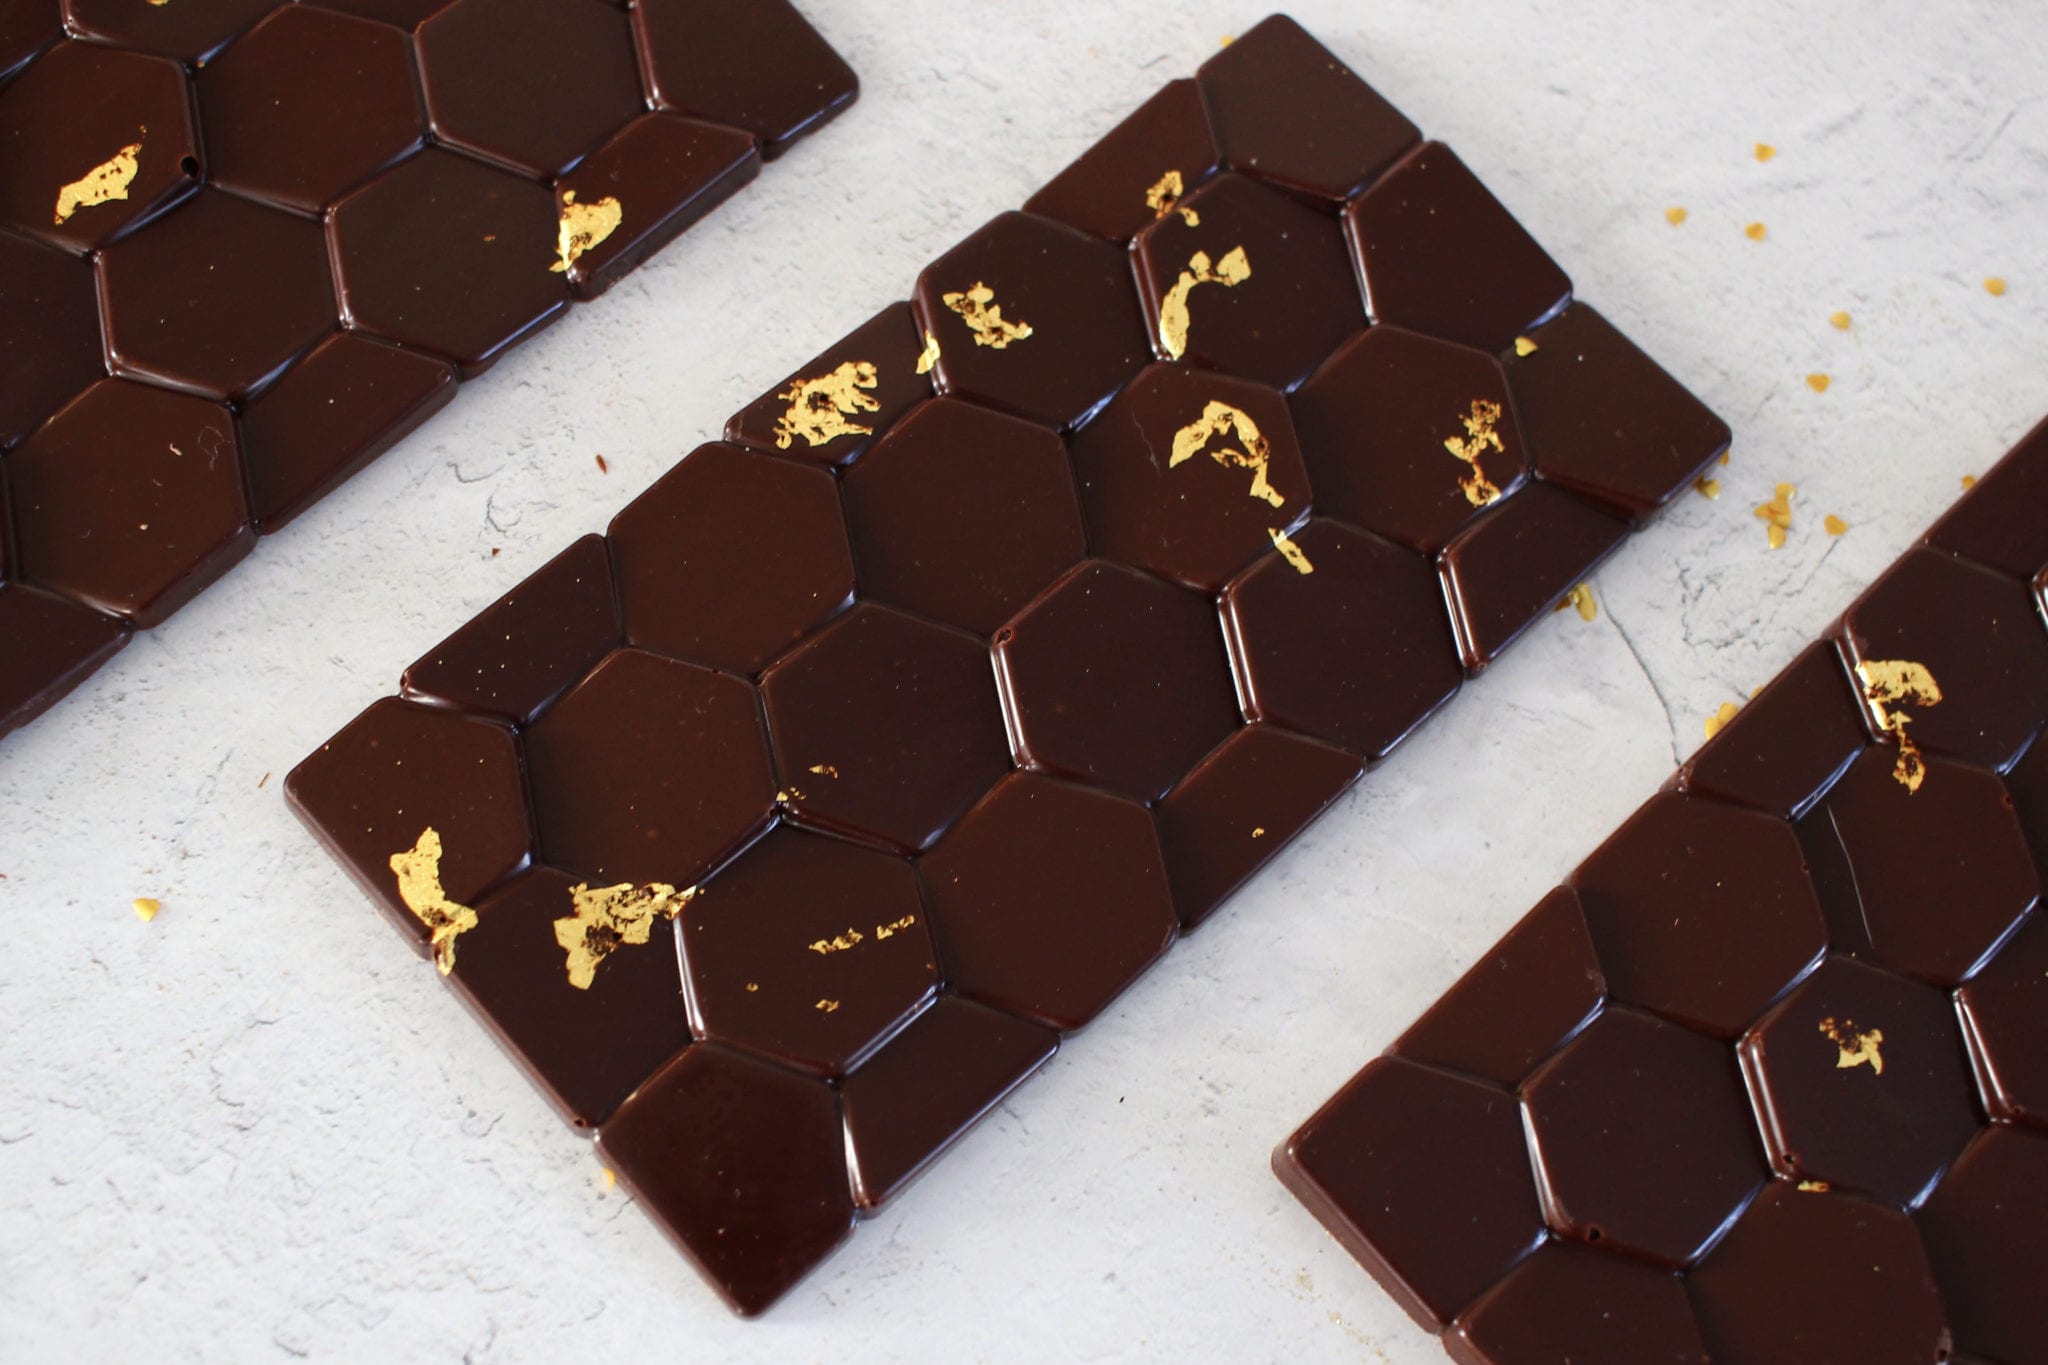 Edible Review: Cali Gold Chocolate Bars